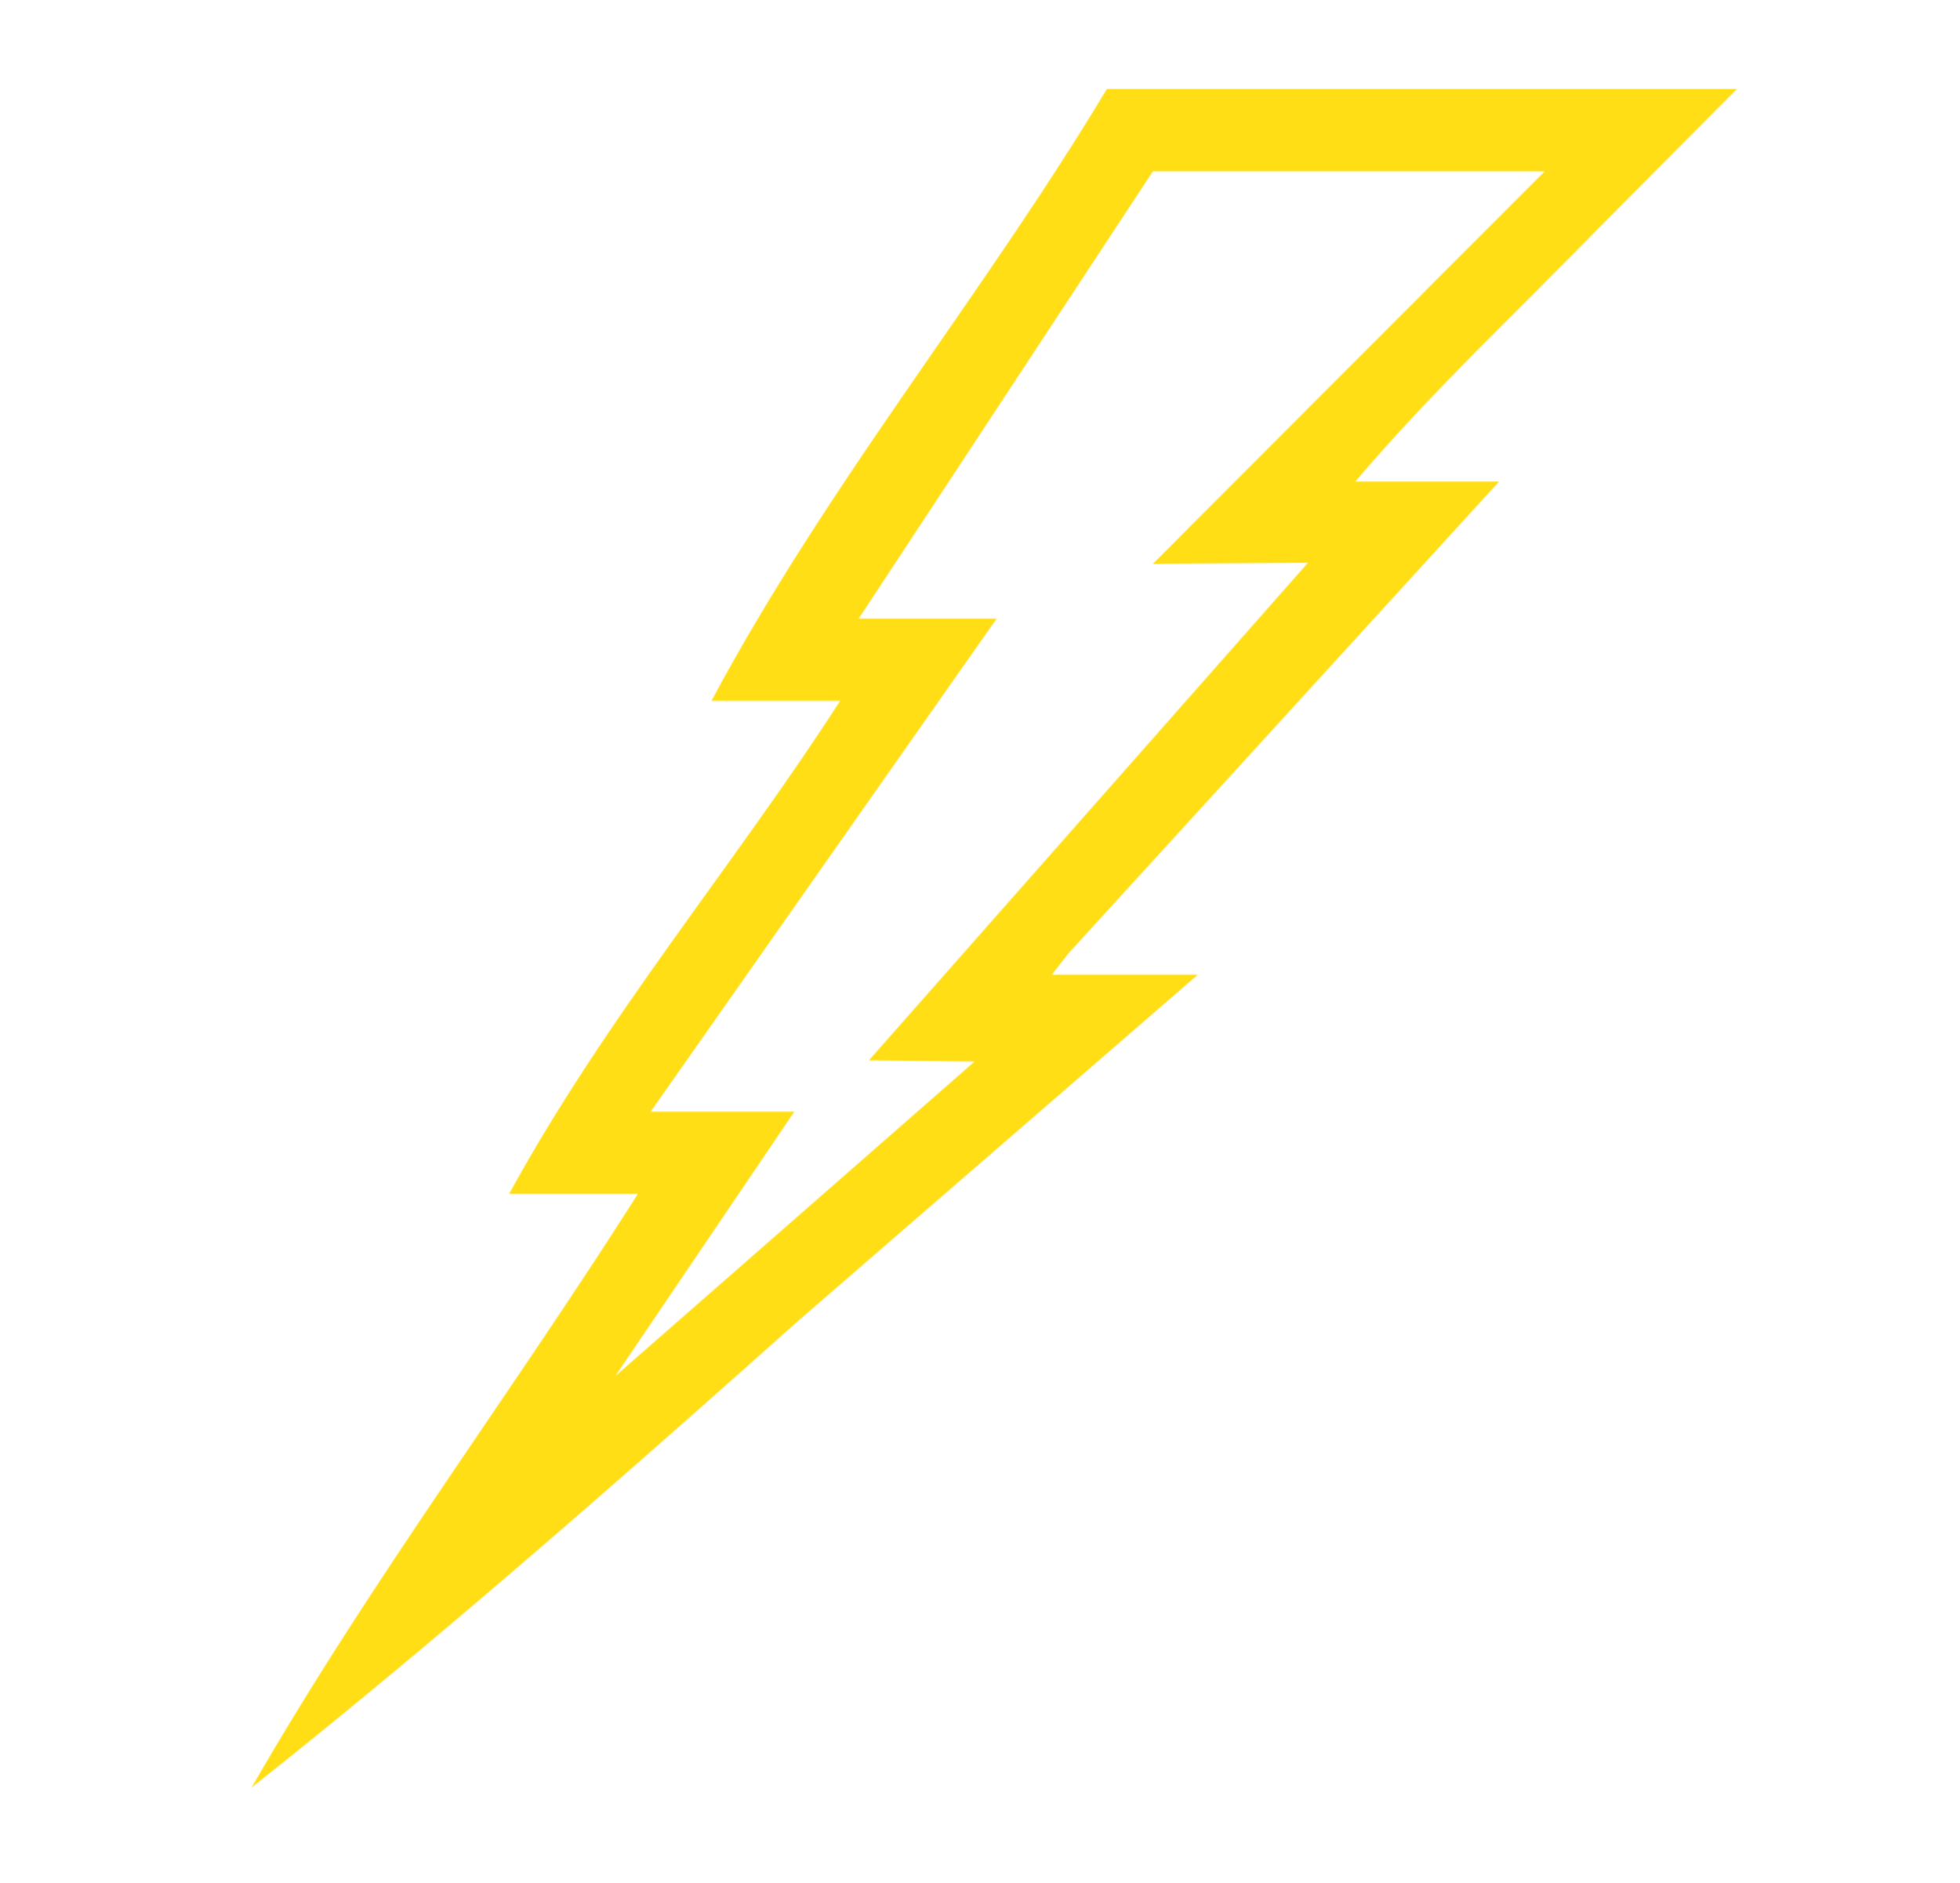 Sideways Lightning Bolt Logo - Free Lightning Bolt Image, Download Free Clip Art, Free Clip Art